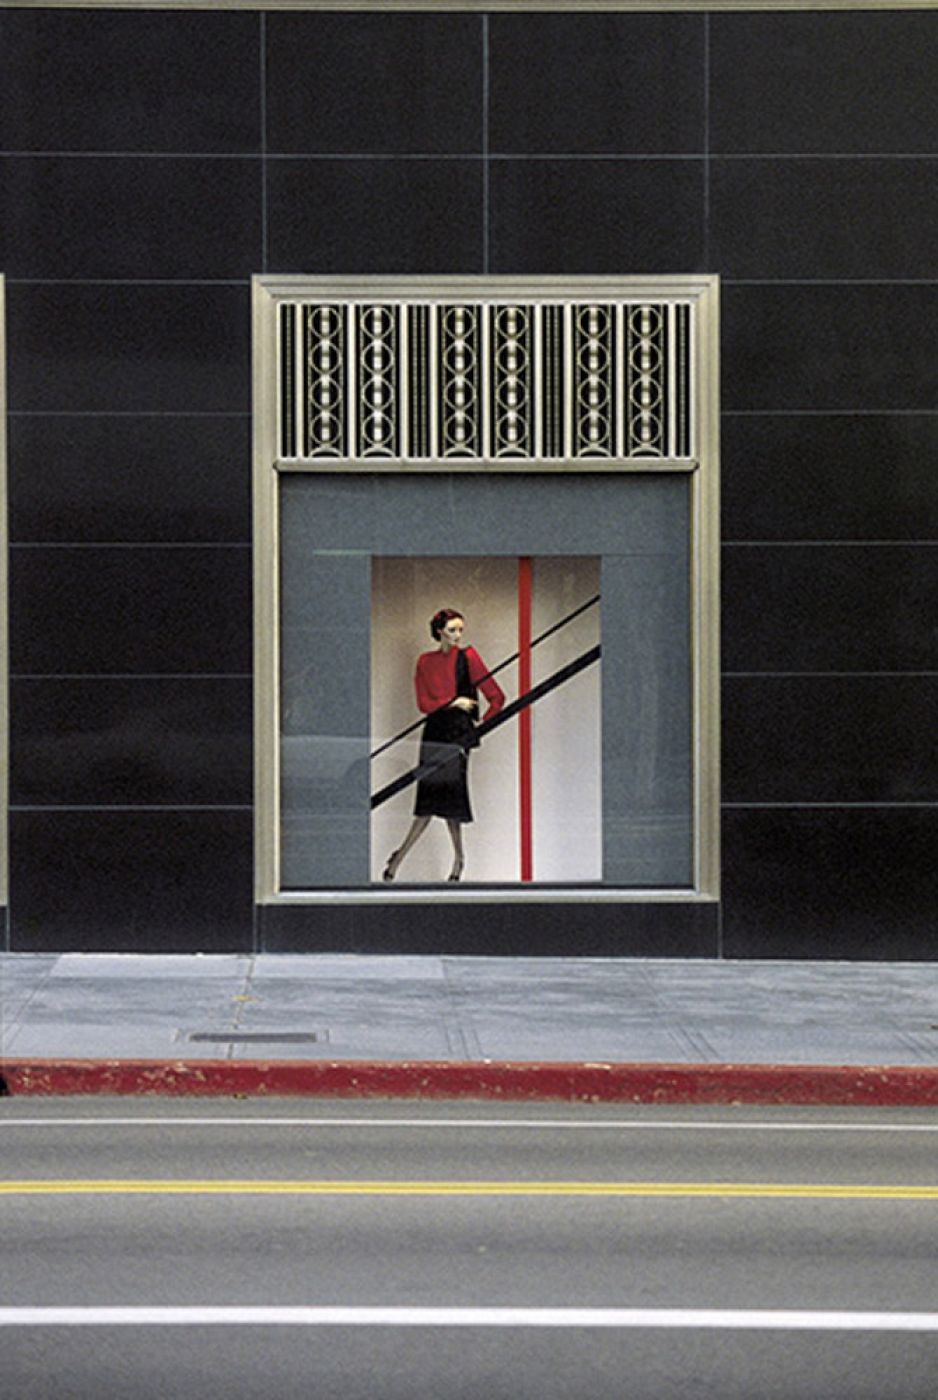 Franco Fontana, “Urban landscape, Los Angeles”, 1979